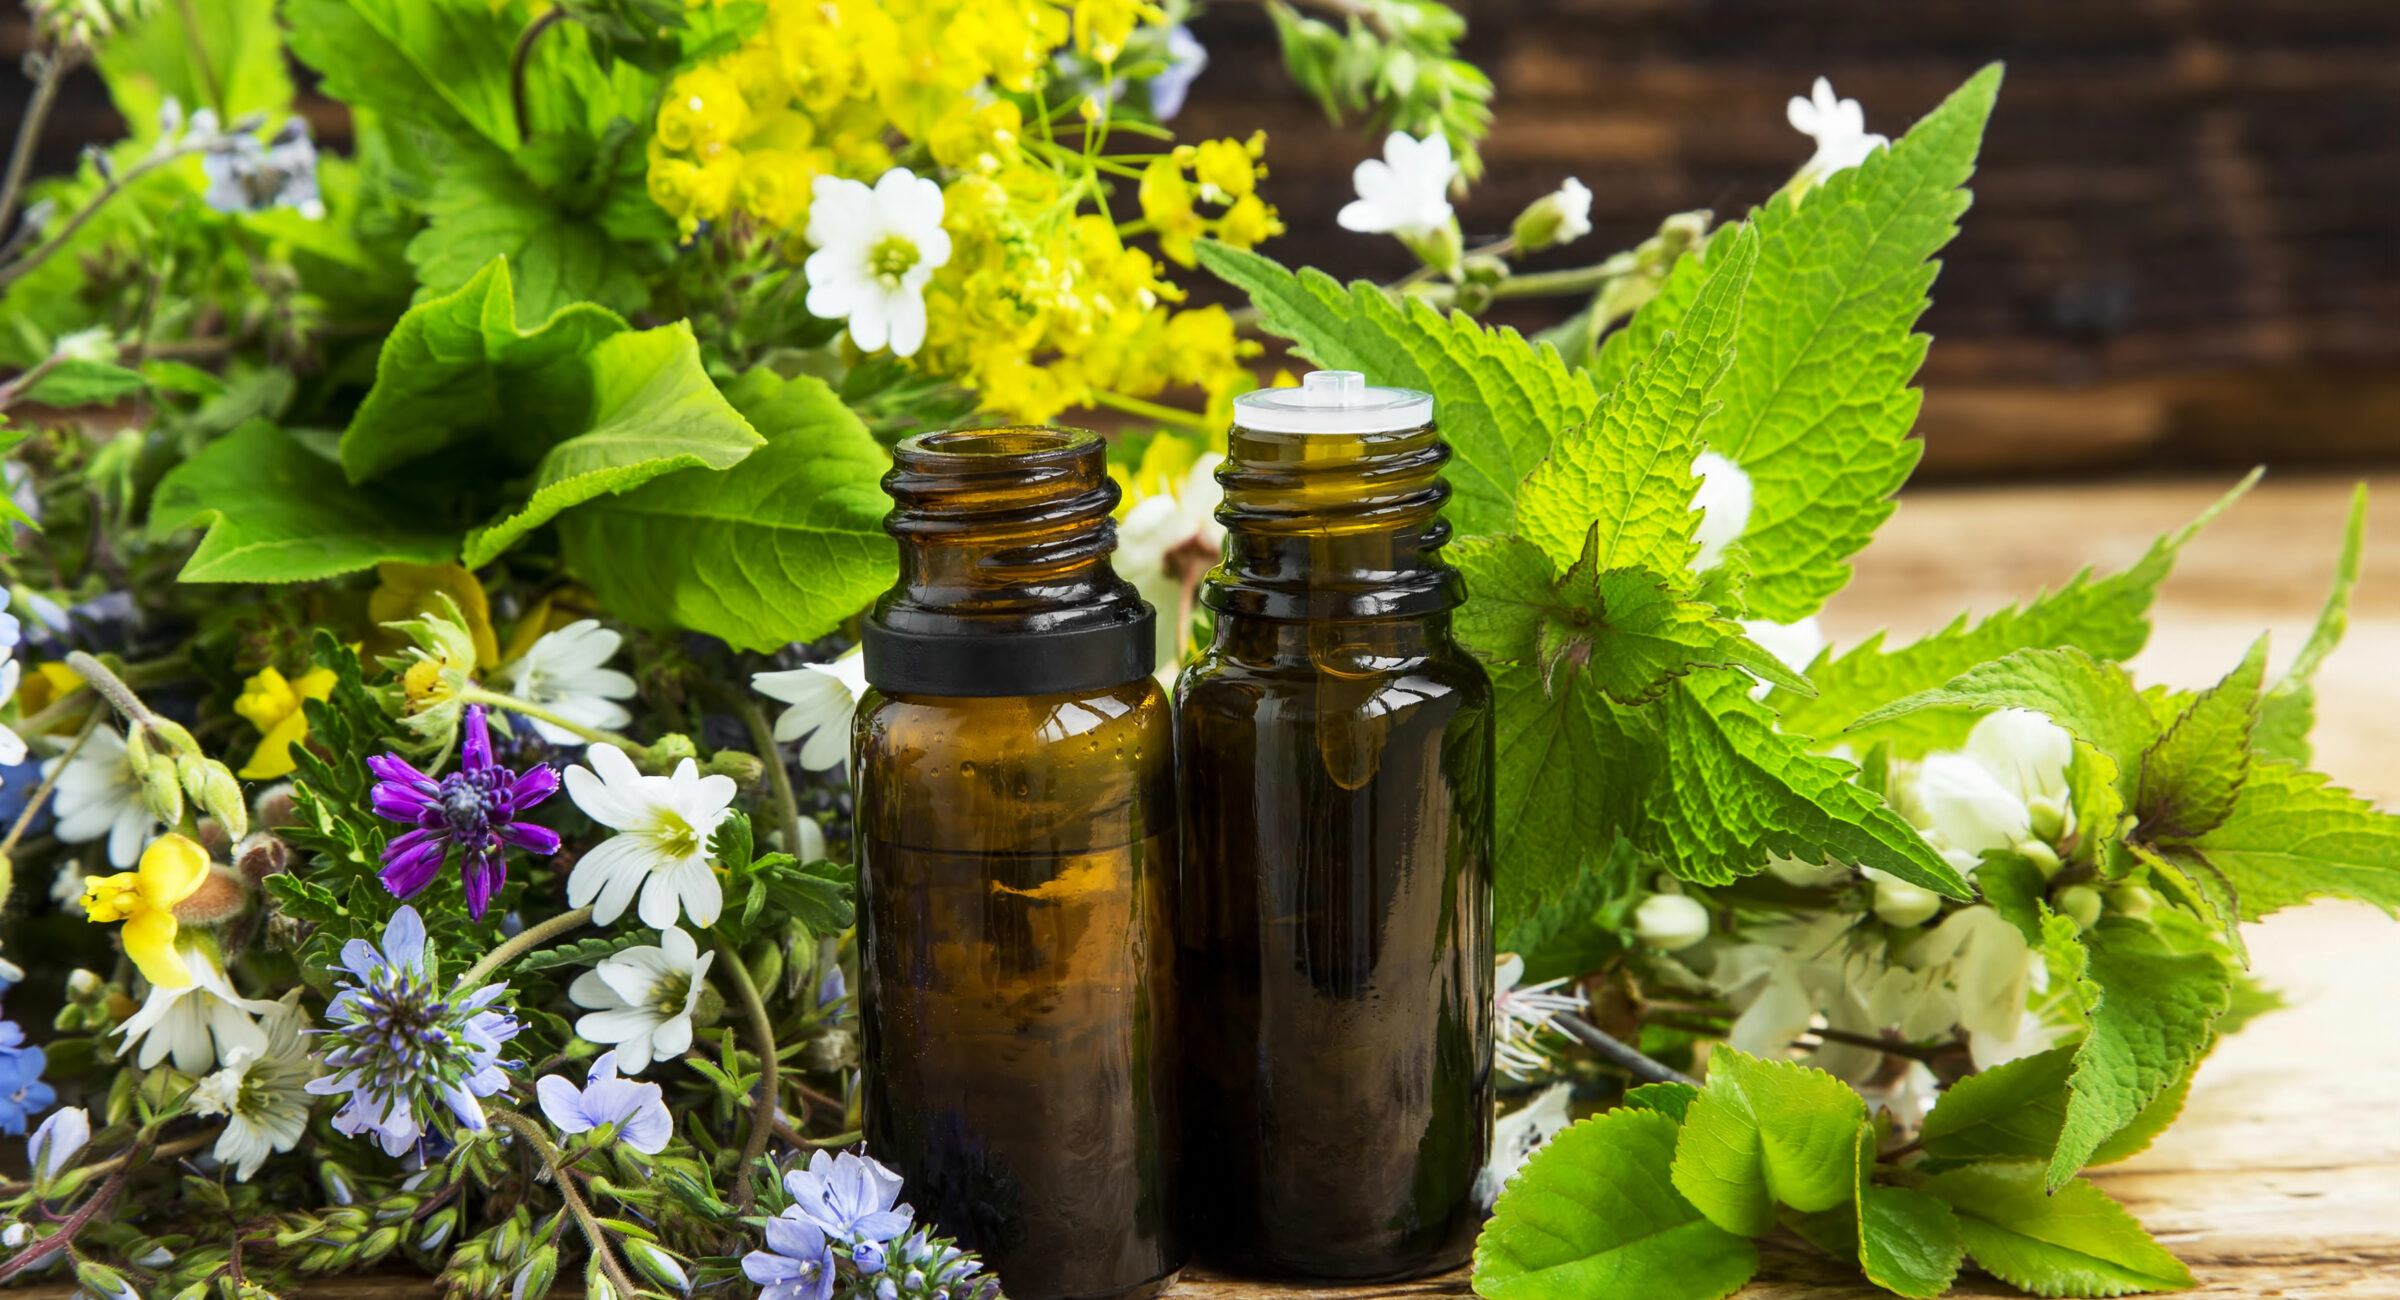 Alternative herbal medicine made from plants